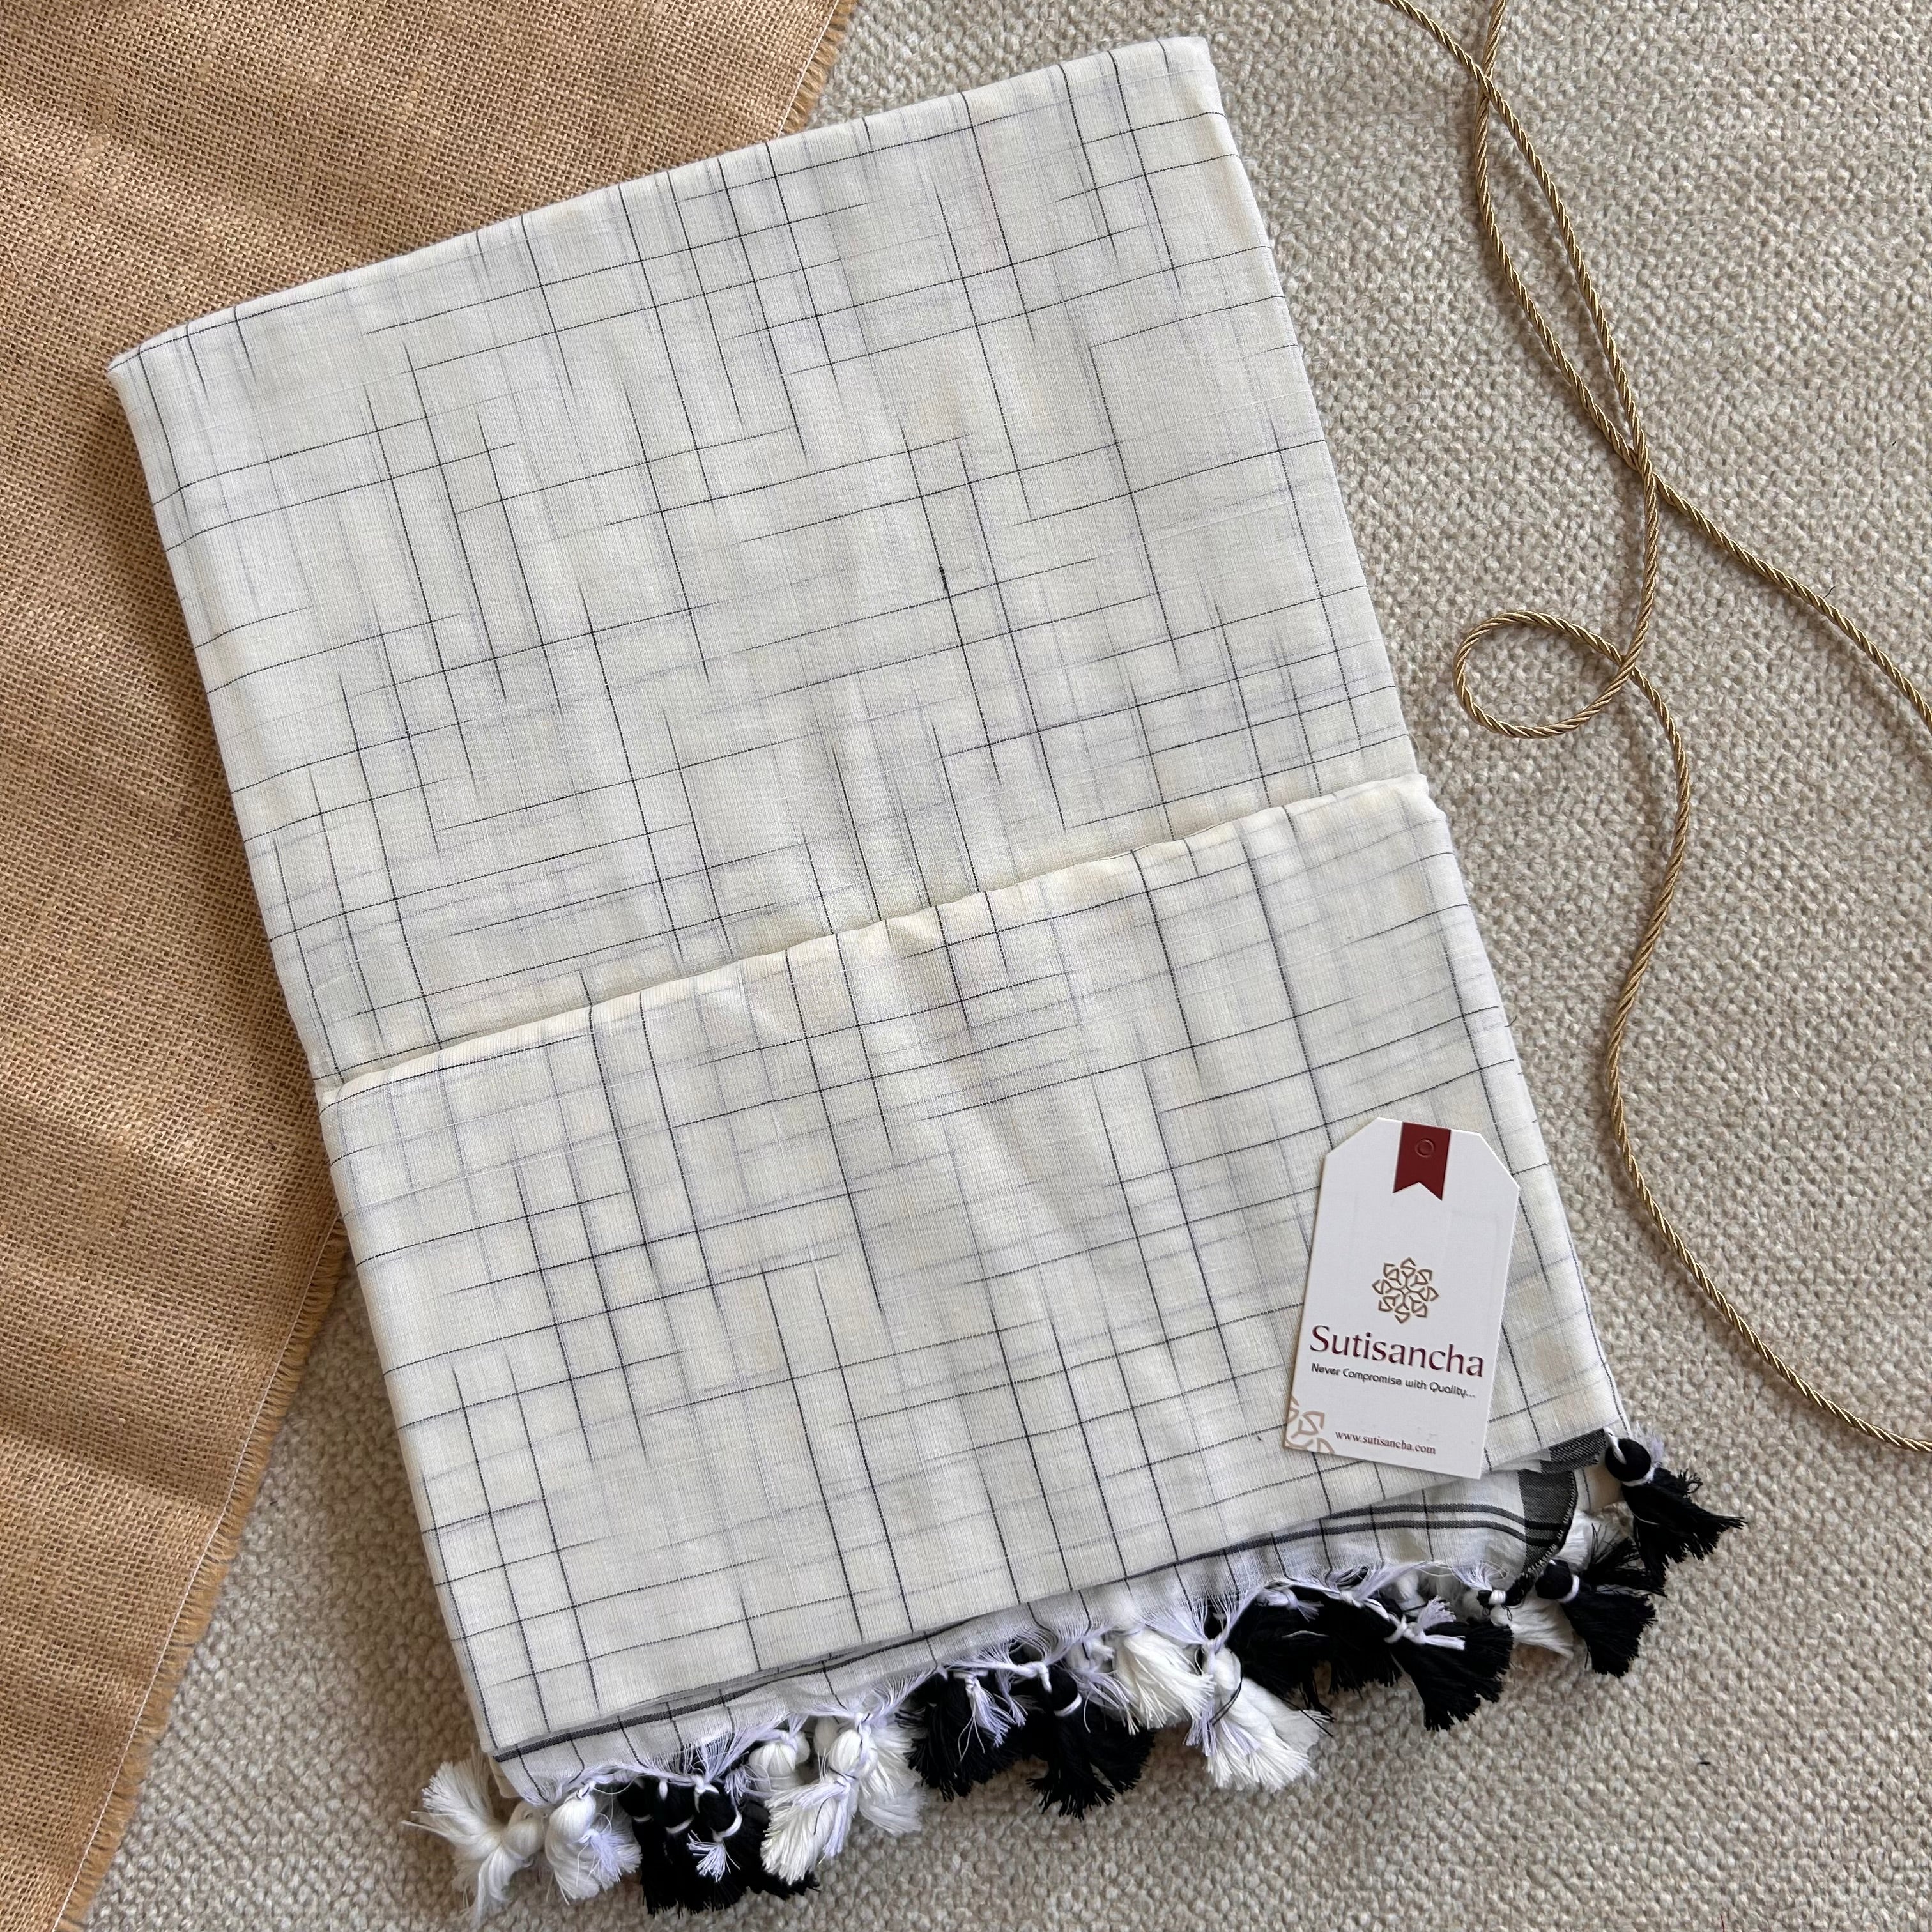 Sutisancha Offwhite Handloom Cotton Saree with Trendy Kotki Checks Design